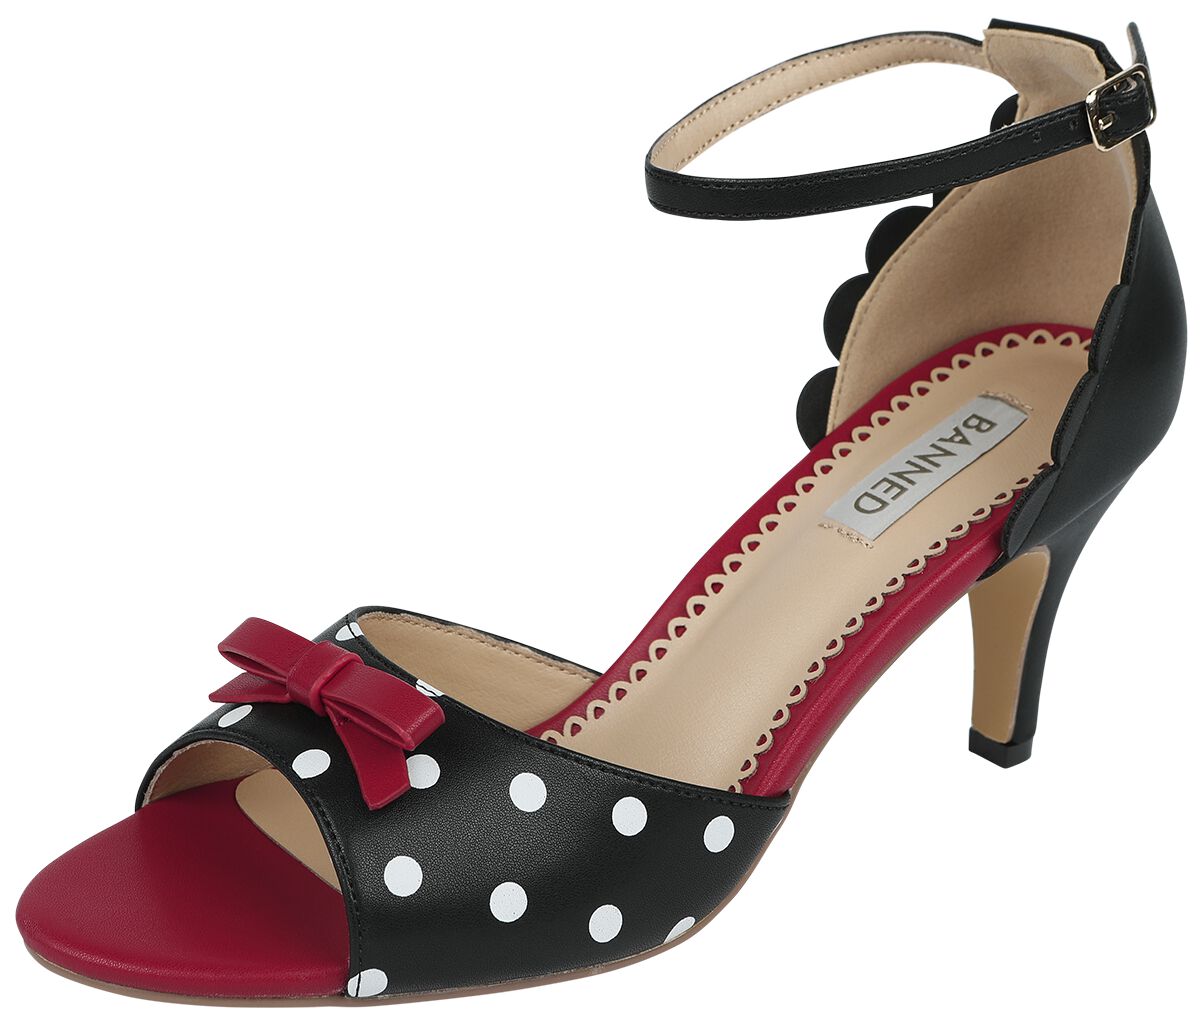 Banned Retro Poppy Polka Open Toe Sandals High Heel schwarz rot in EU37